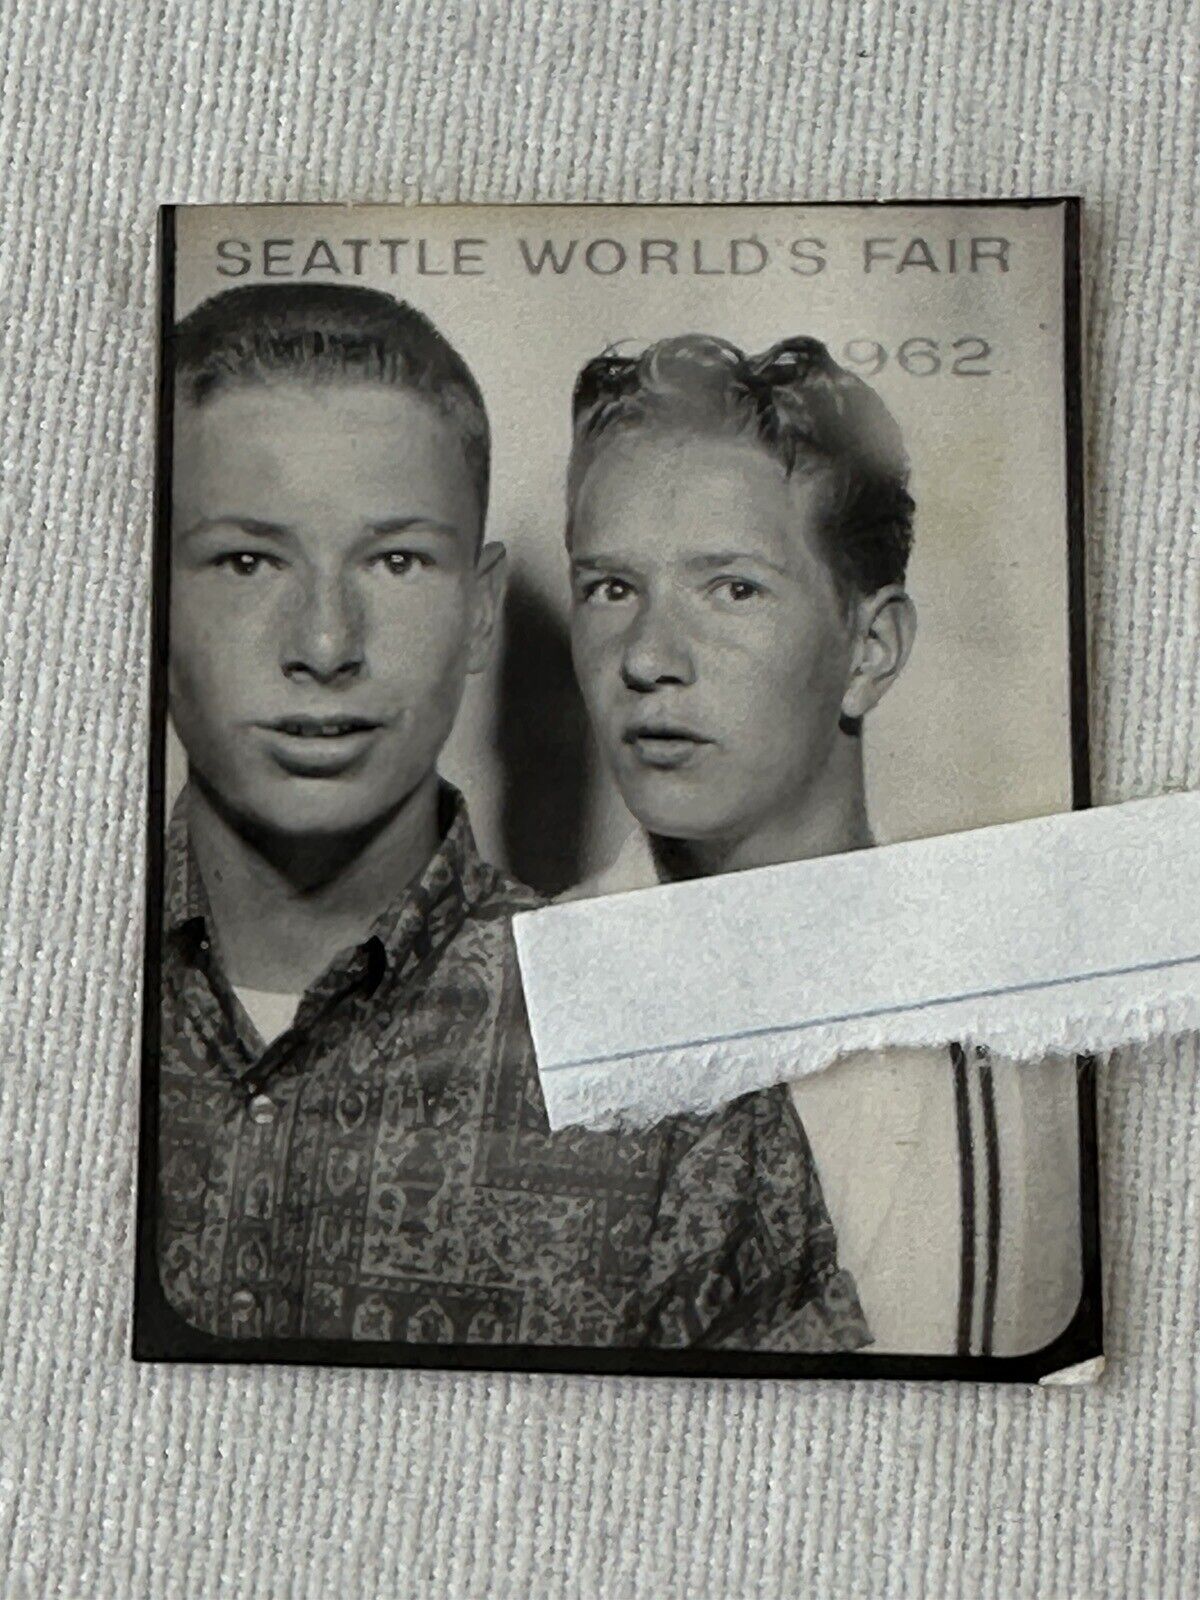 Vtg photo booth PHOTOGRAPH SEATTLE WORLDS FAIR 1962 boys teenagers RARE portrait